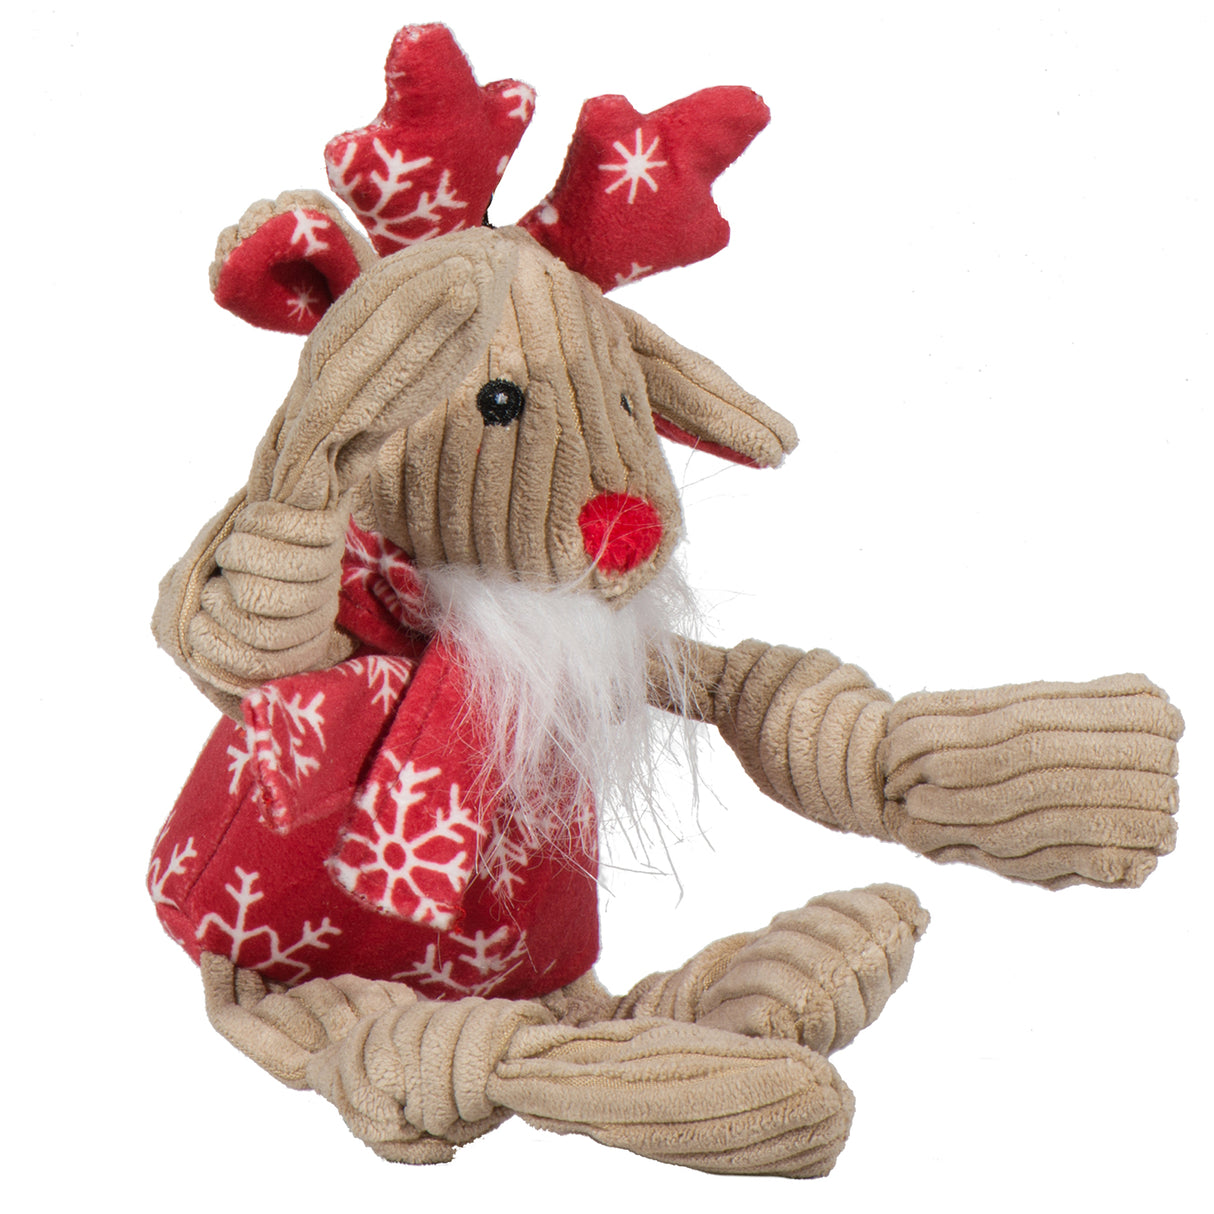 Hugglehounds Knottie Rudy Reindeer